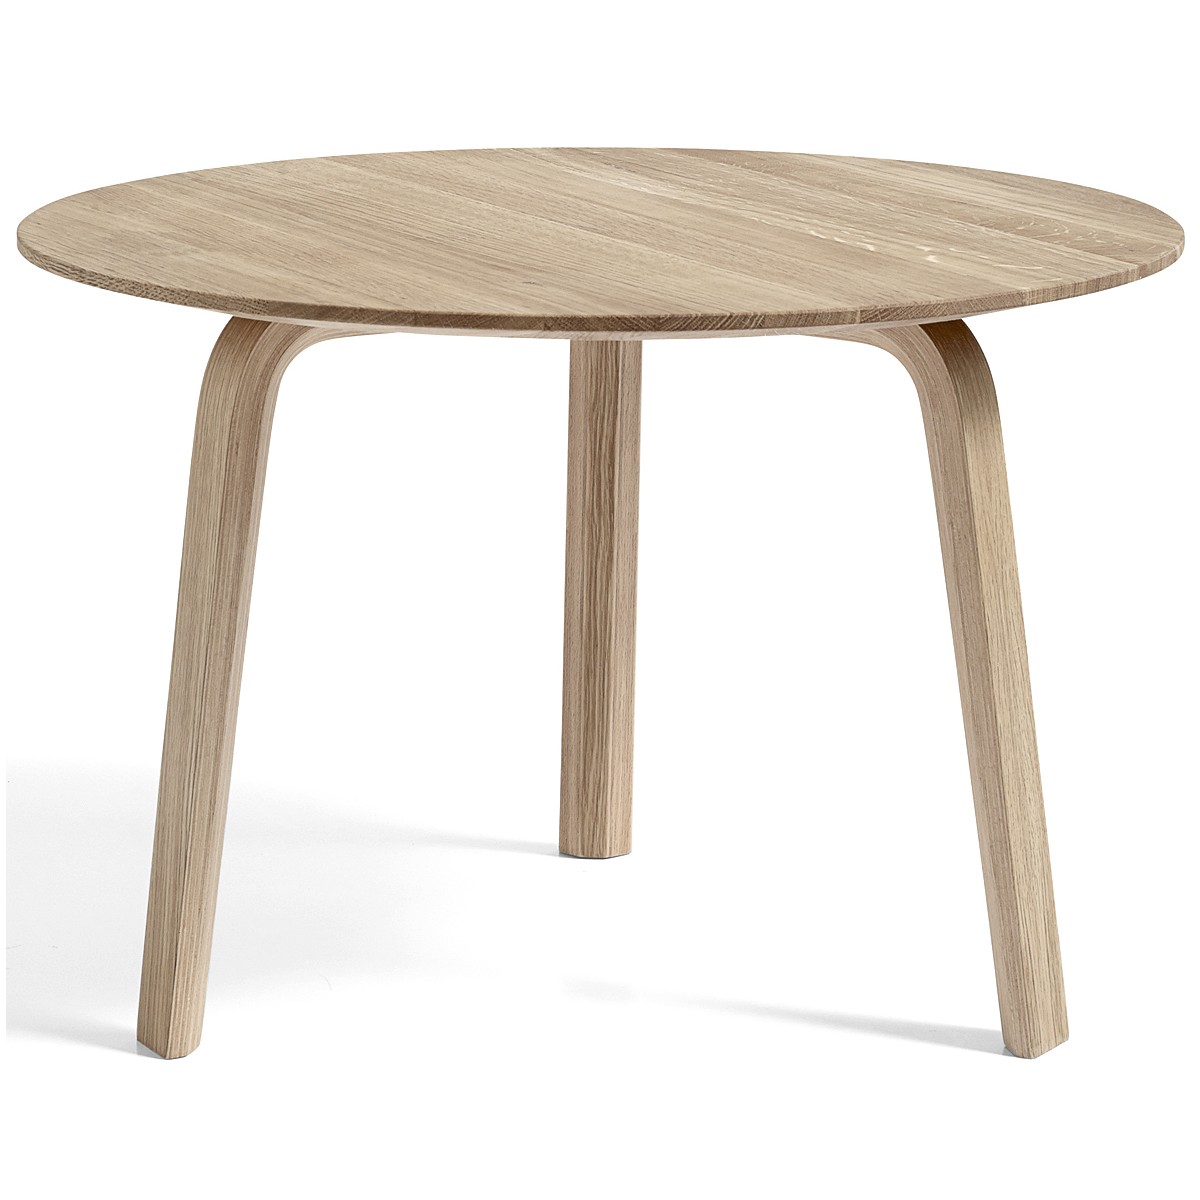 matt lacquered oak - Ø60xH39cm - Bella coffee table